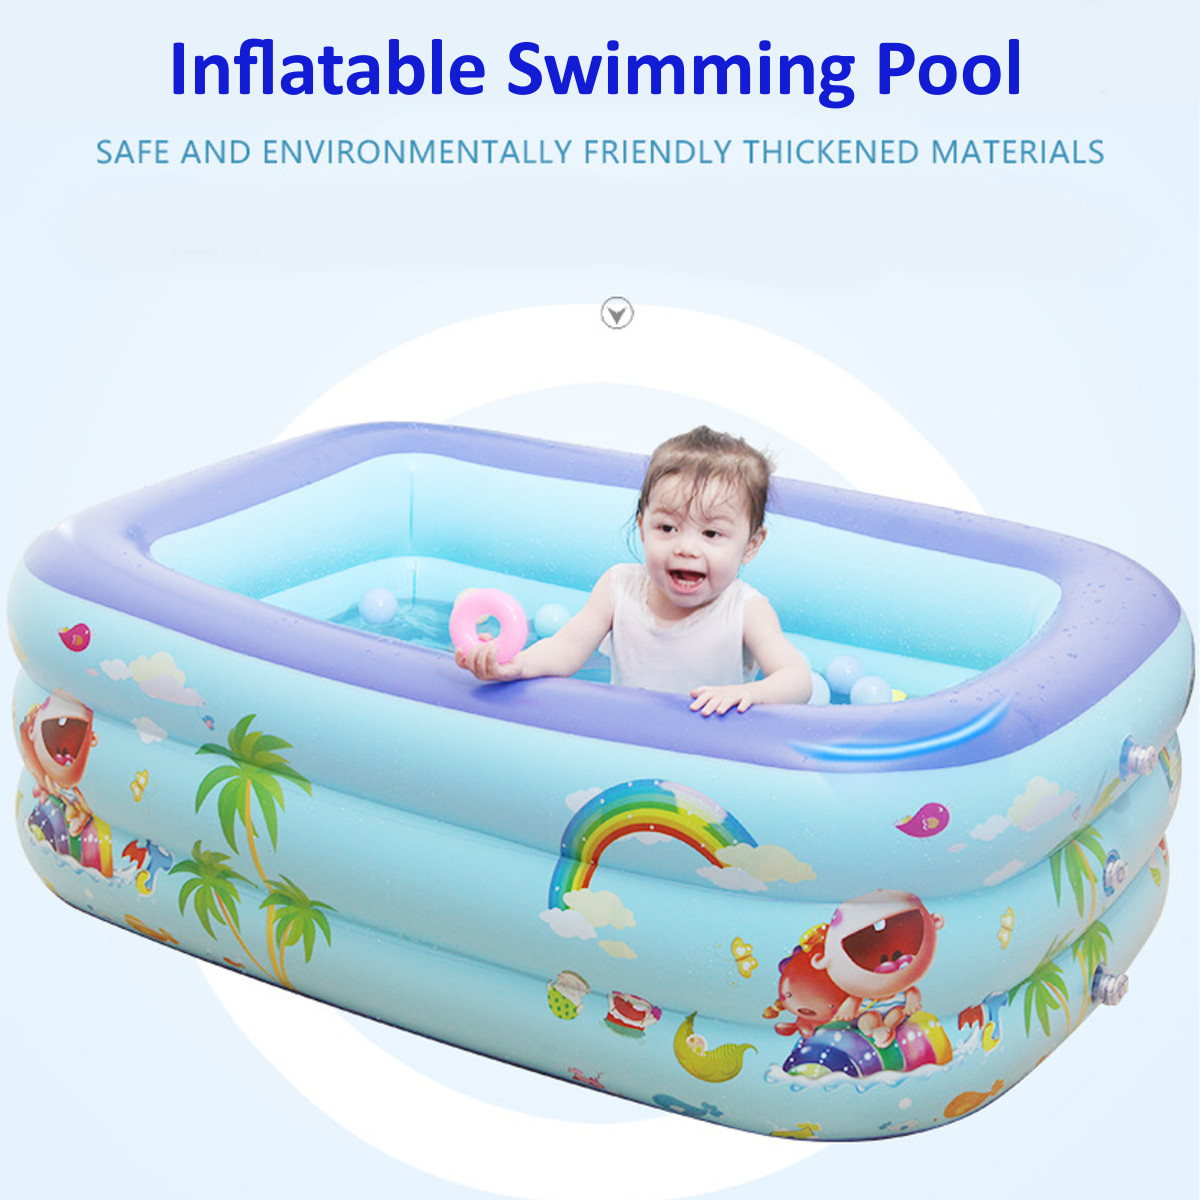 Inflatable-Swimming-Pool-Adults-Kids-Ocean-Ball-Pool-Bathing-Tub-Play-Water-Outdoor-Indoor-1706428-1